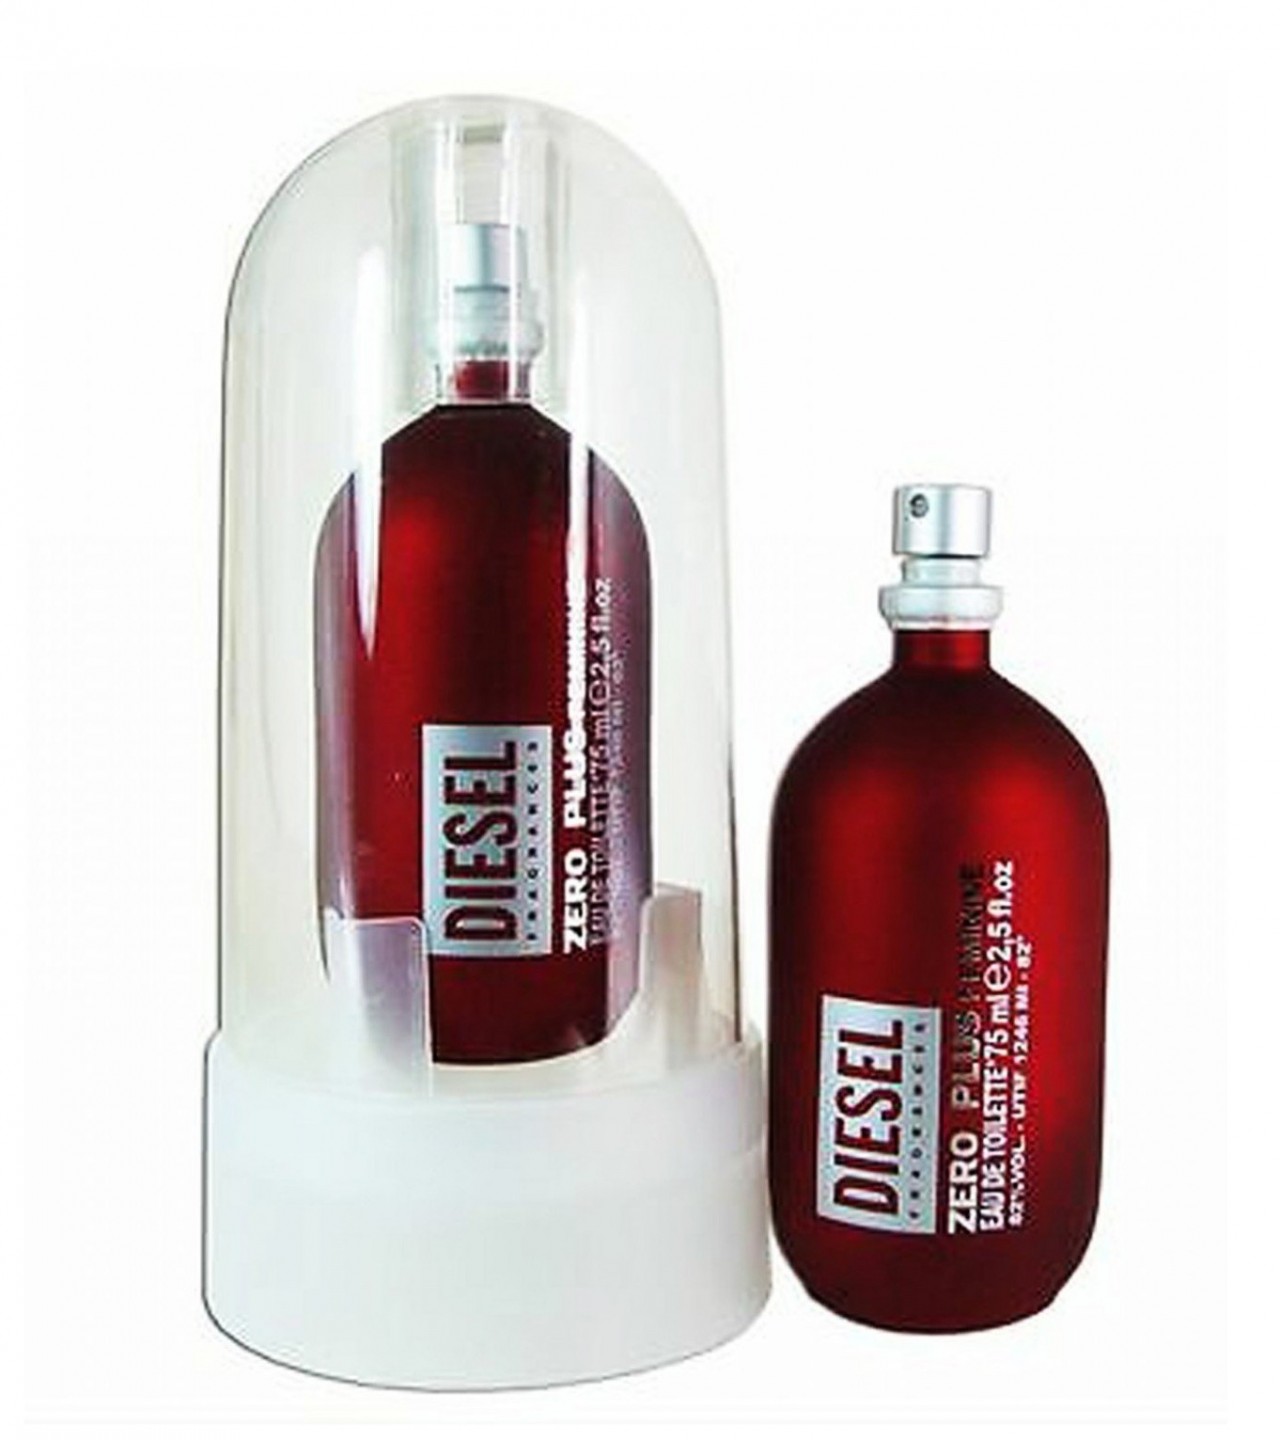 Diesel Zero Plus Perfume for Women - Eau de Toilette Spray 2.5 oz - 75 ml